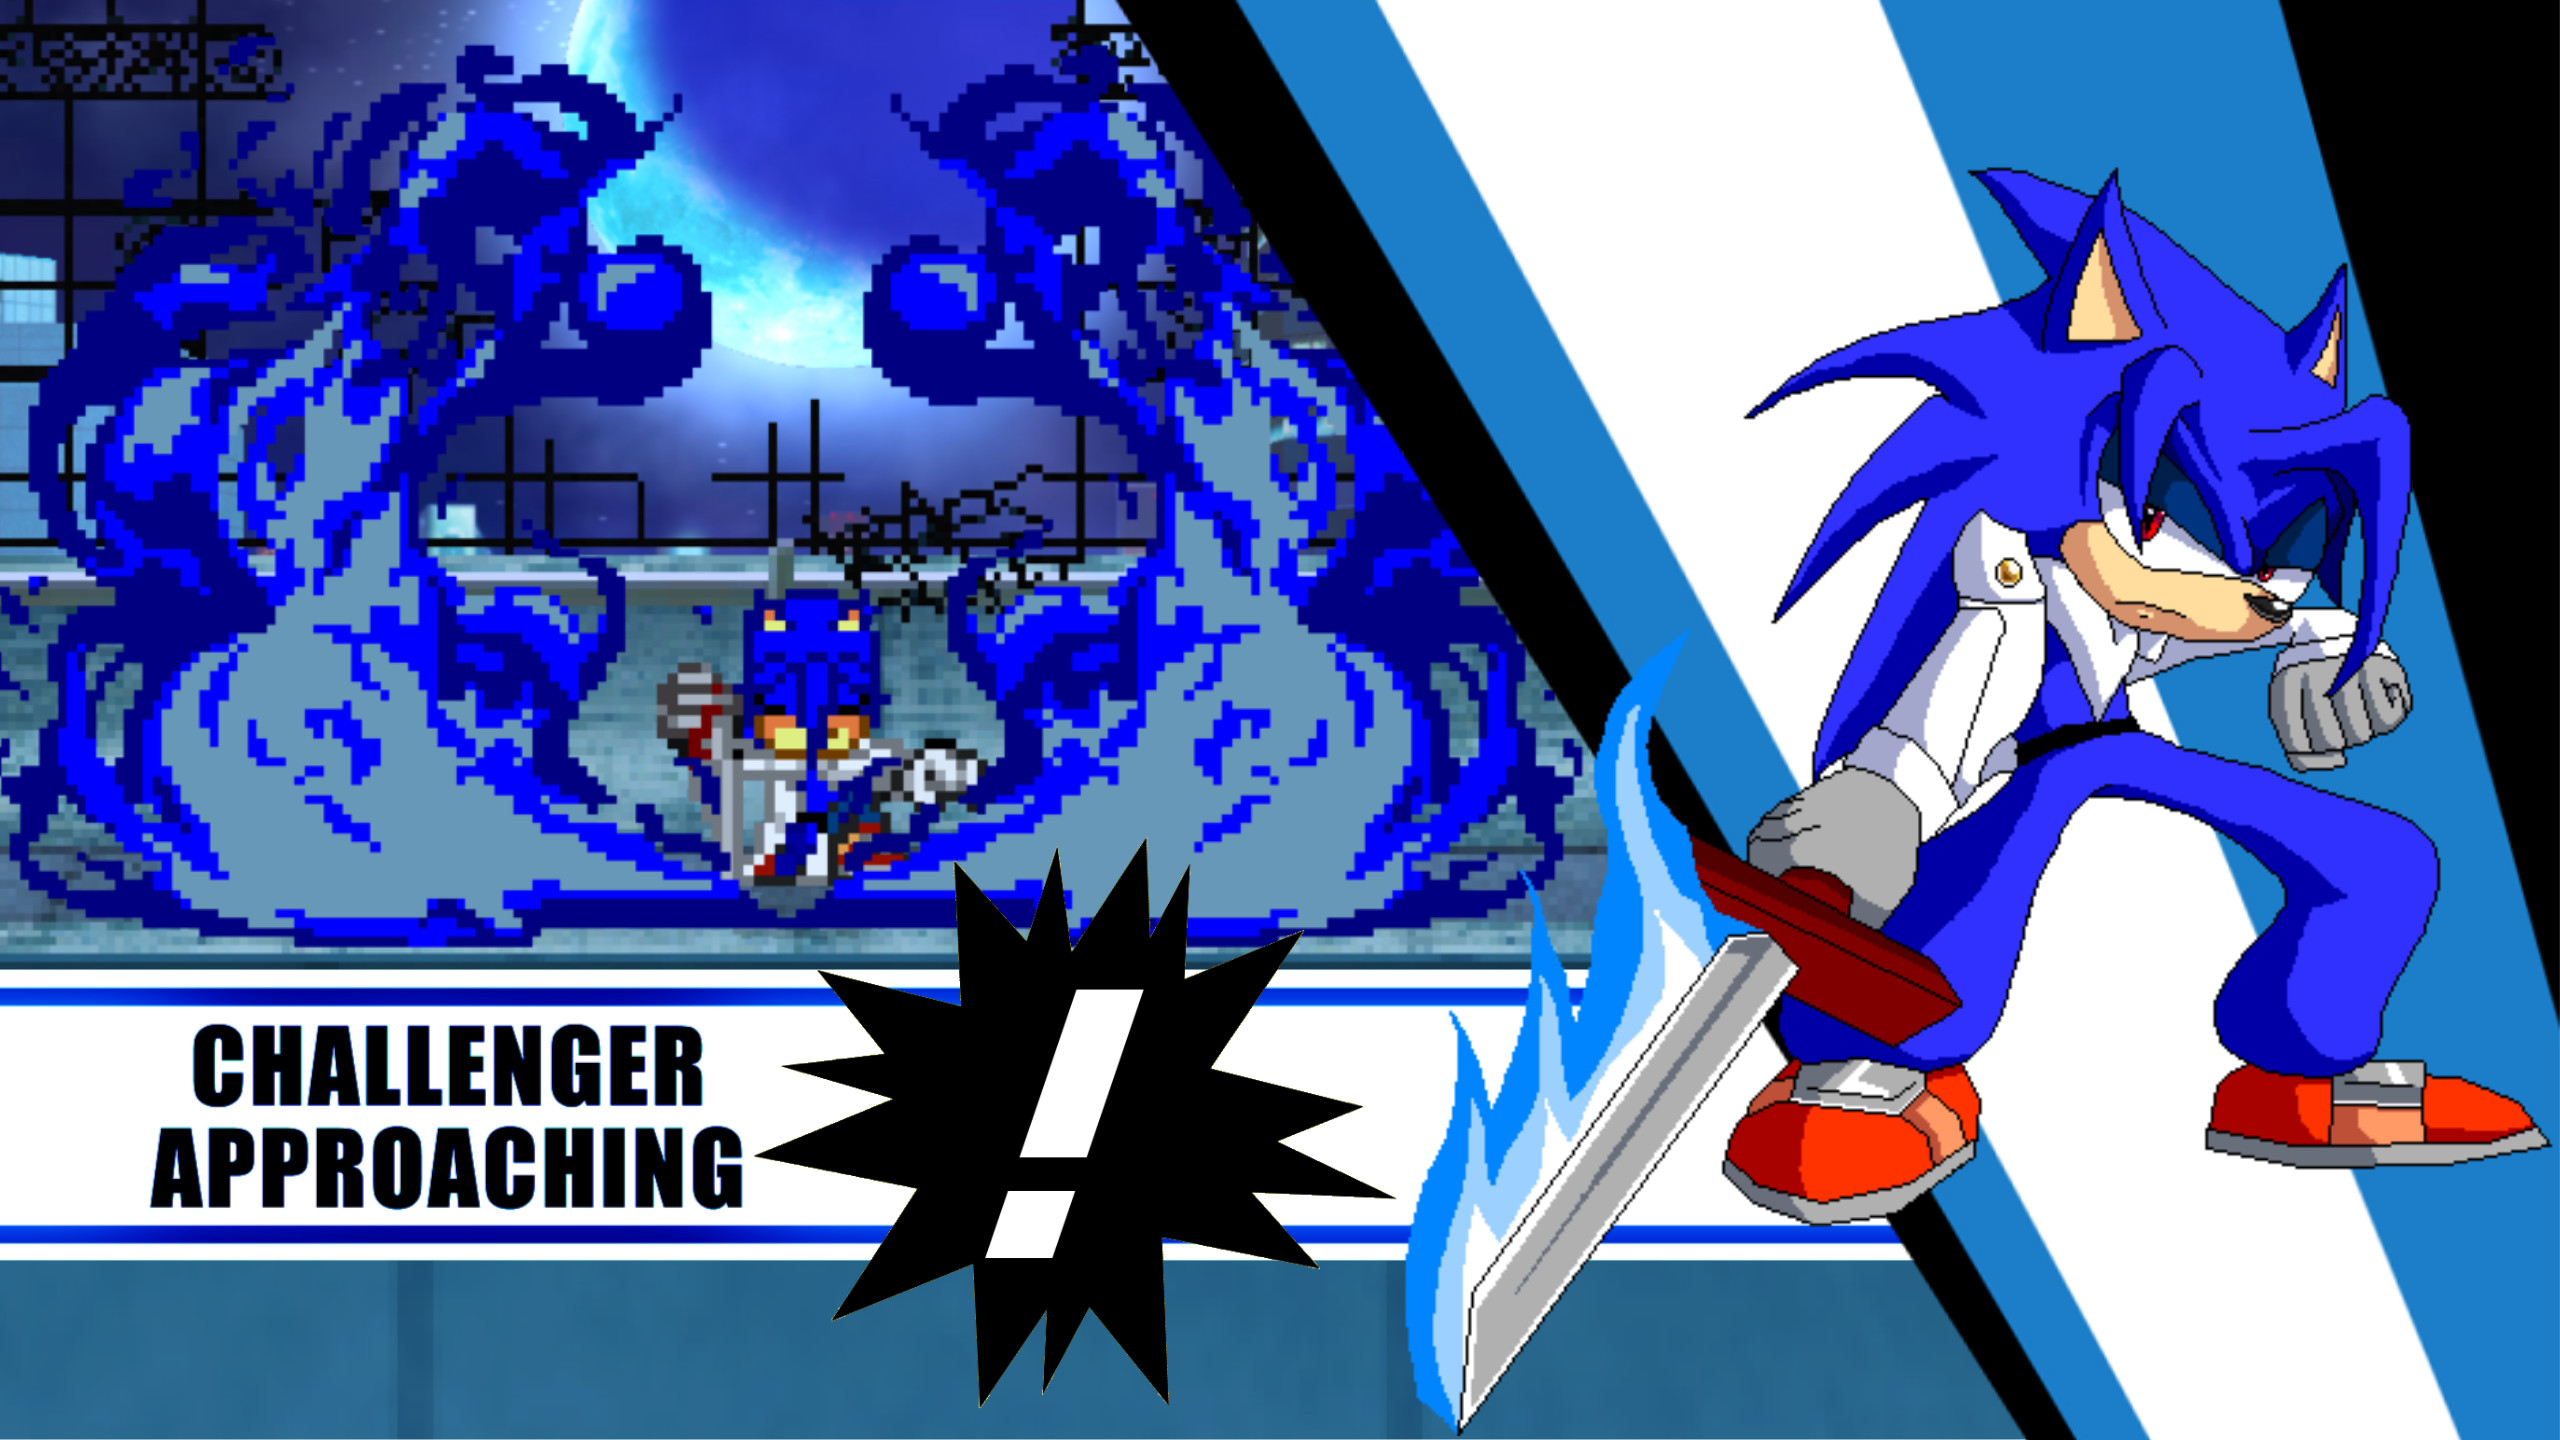 Sonic 2 - Super Shadow vs Sonic - BiliBili